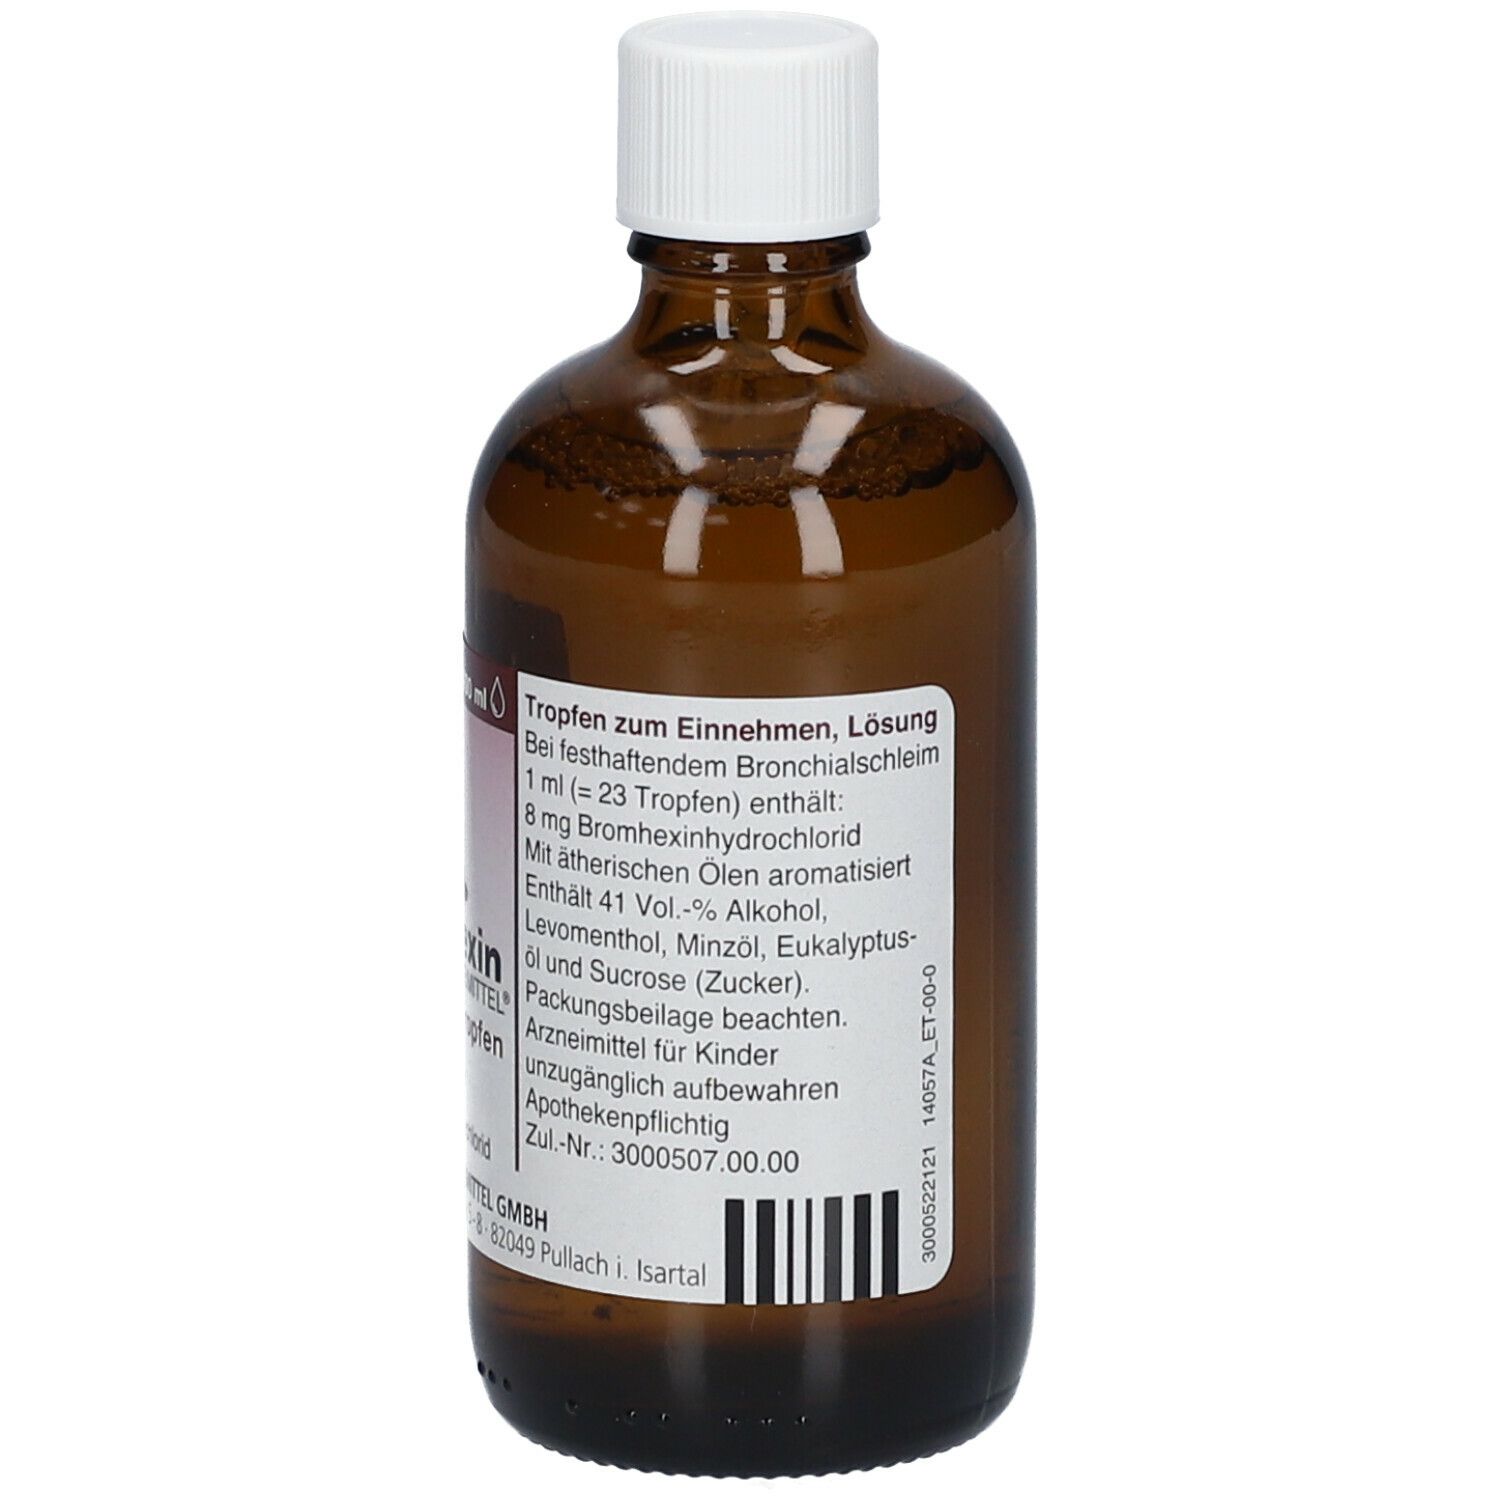 Bromhexin HERMES ARZNEIMITTEL® 8 mg/ml